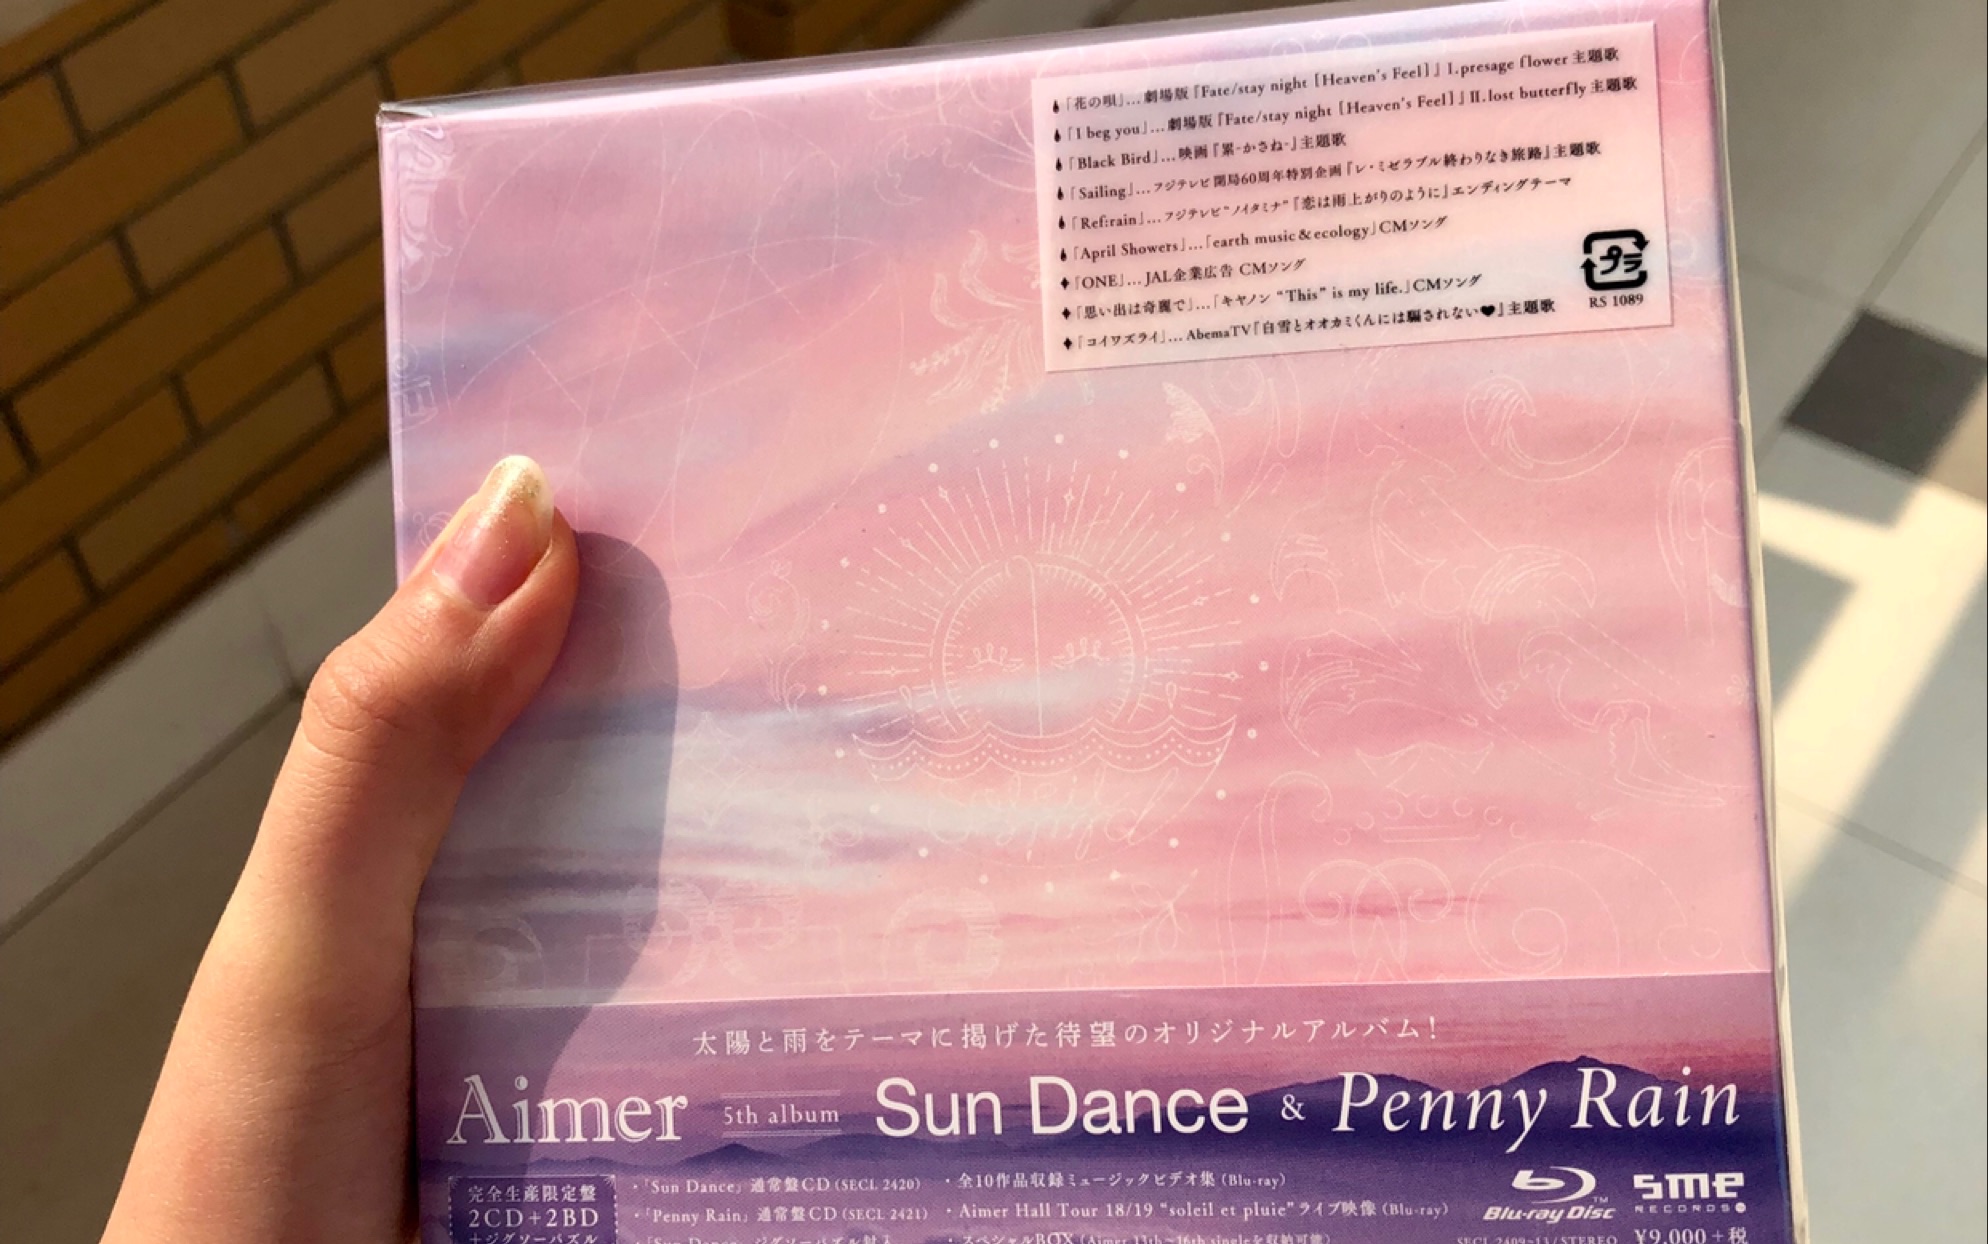 Aimer エメ Sun Dance Penny Rain 完全限定盘开箱视频 哔哩哔哩 つロ干杯 Bilibili